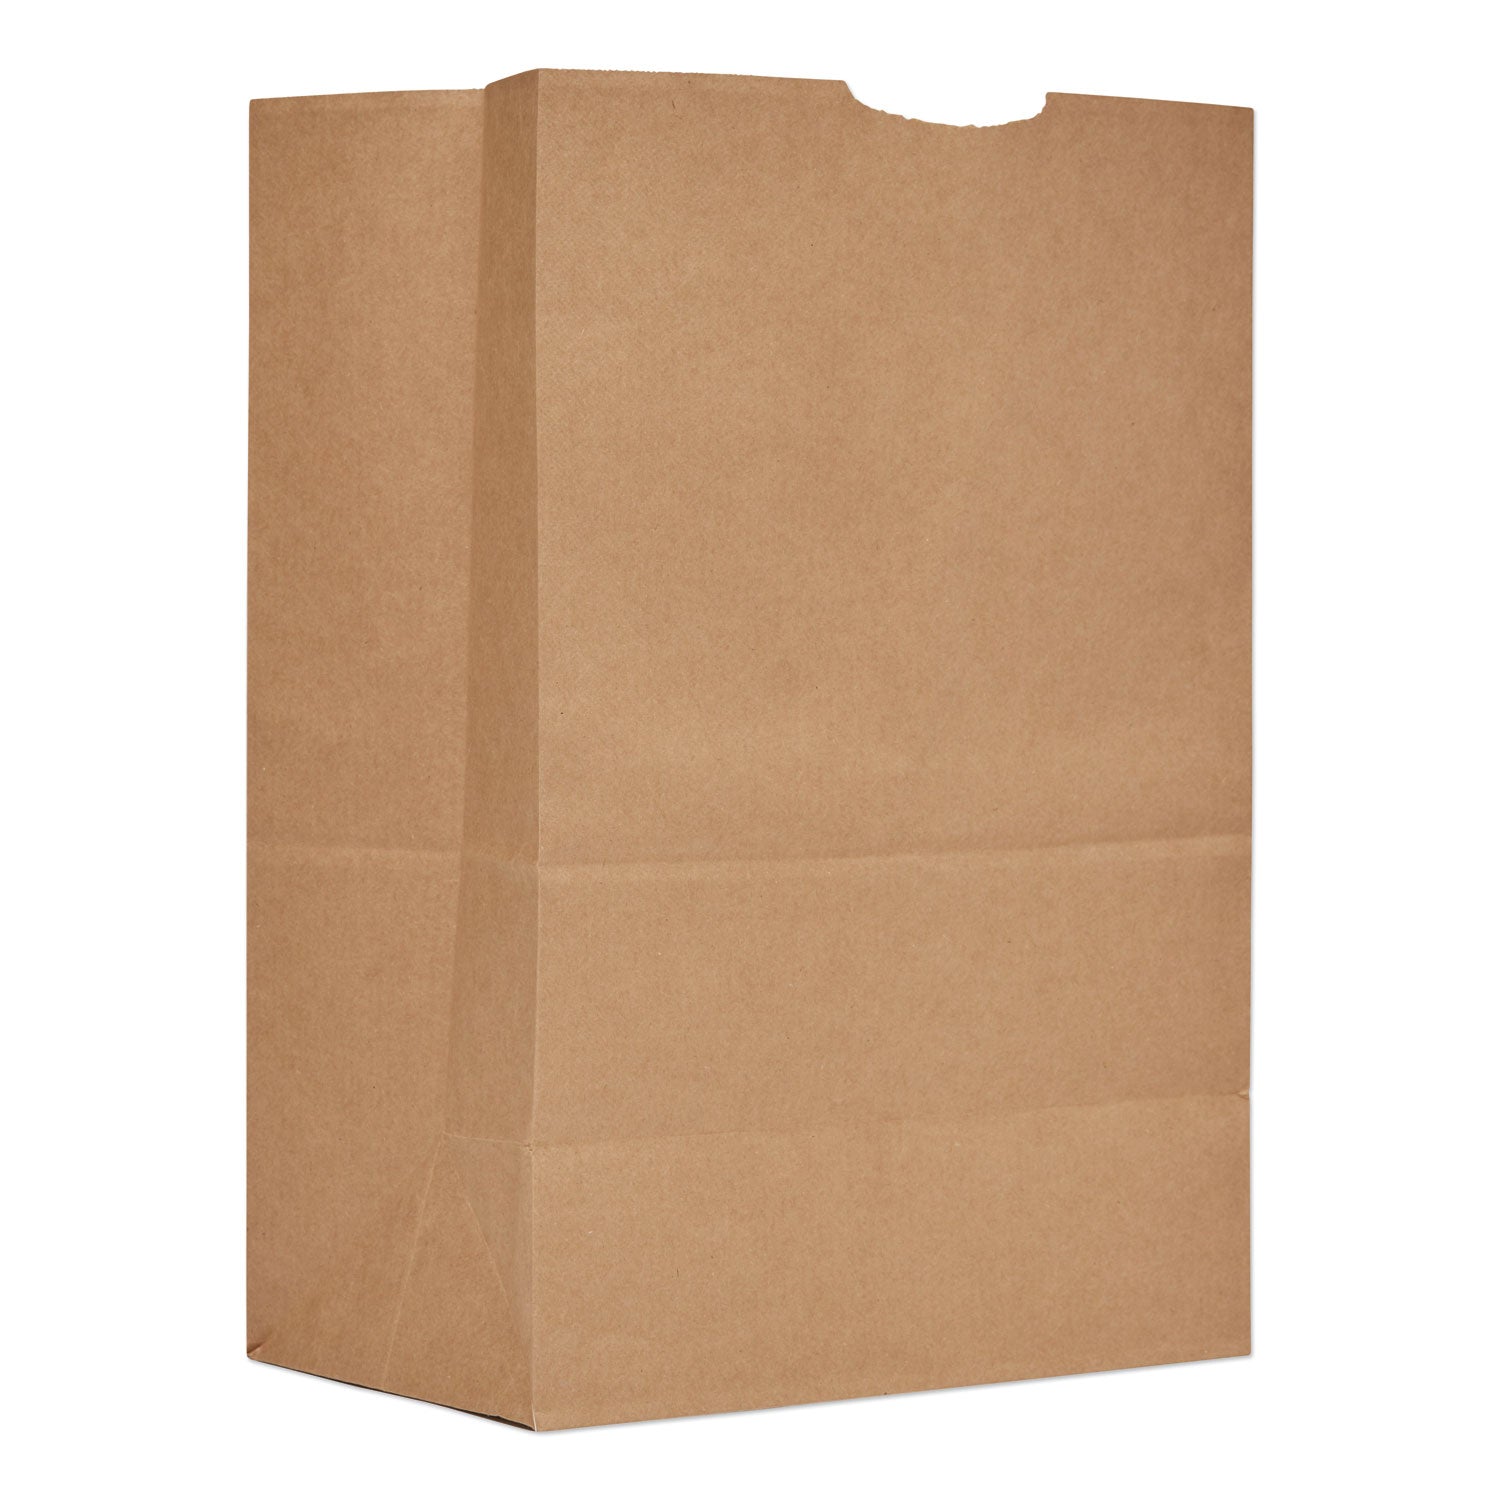 grocery-paper-bags-20-25-lb-capacity-1-6-bbl-12-x-7-x-17-kraft-500-bags_bagsk1657 - 1